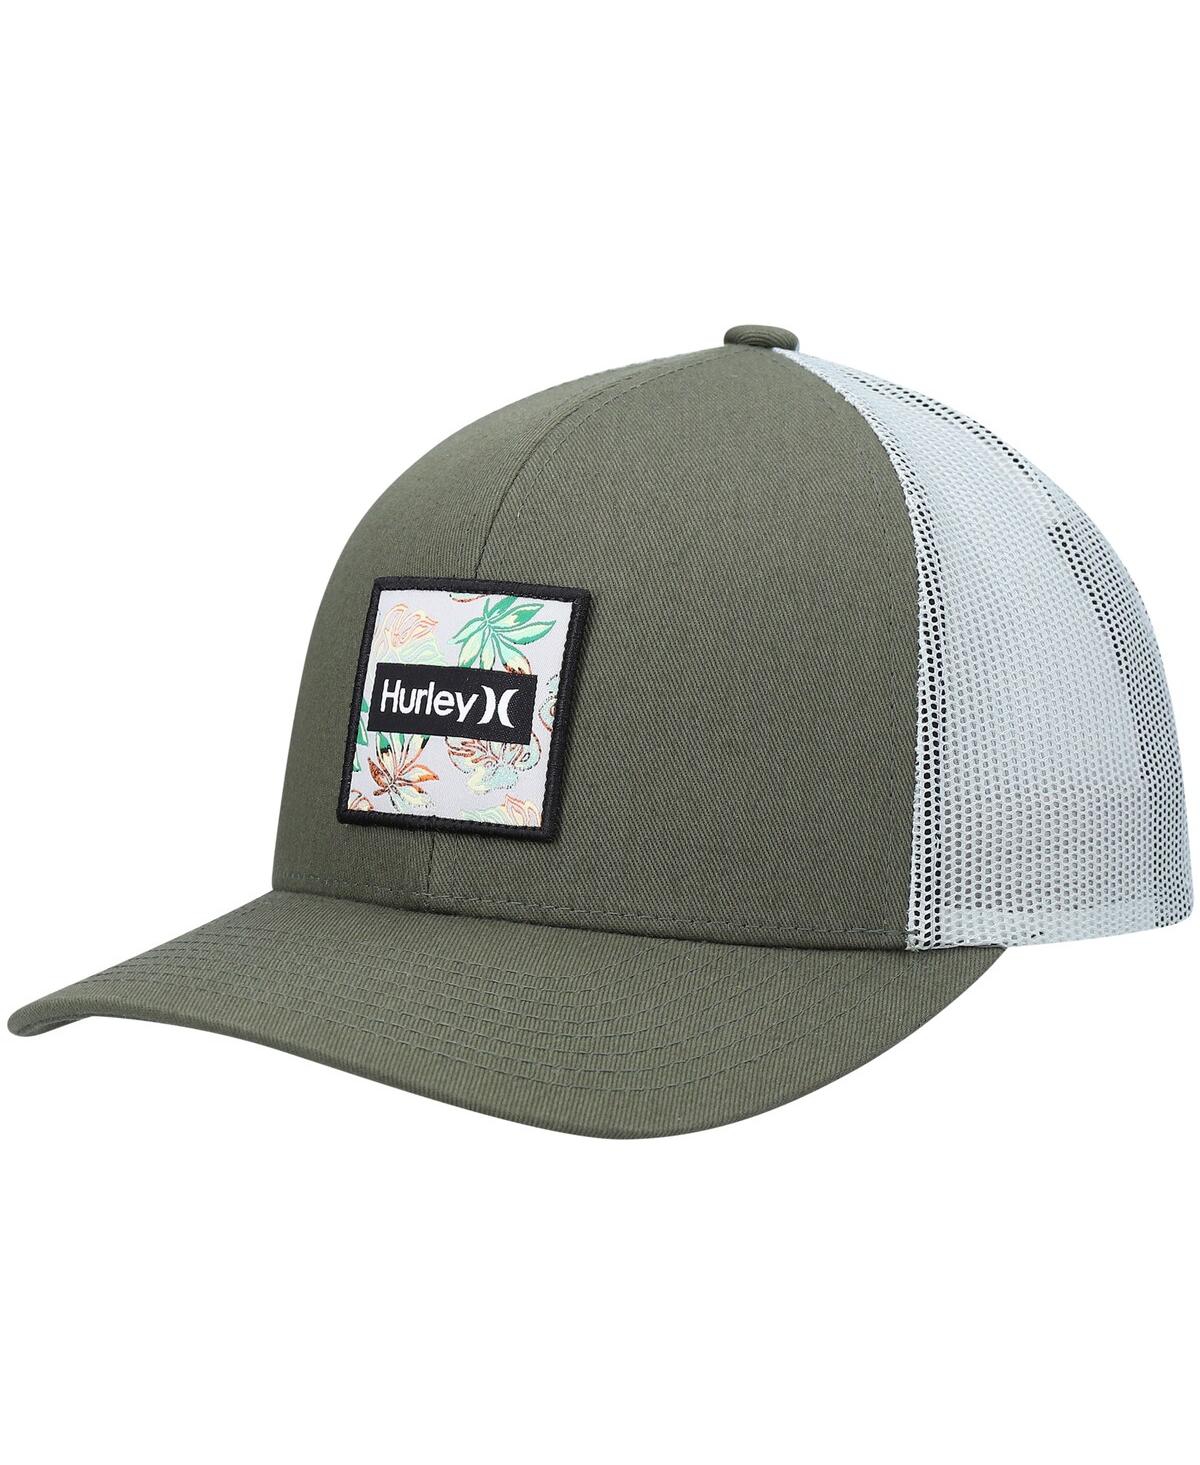 Men's Hurley Green Seacliff Trucker Snapback Hat - Green